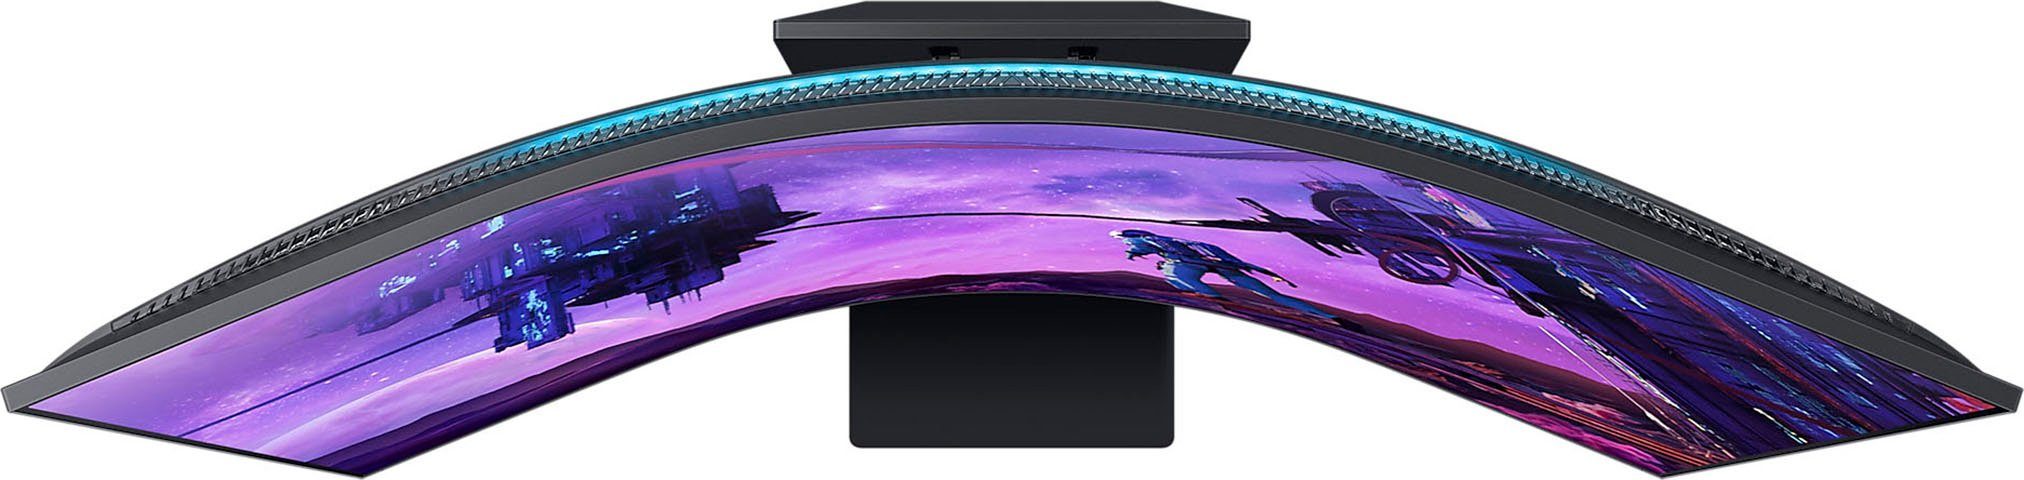 px, Odyssey Ultra 1 2160 cm/55 HD, x Reaktionszeit, Curved-Gaming-LED-Monitor 165 (138 Ark S55BG970NU LED) Hz, 4K 3840 ", VA Samsung ms